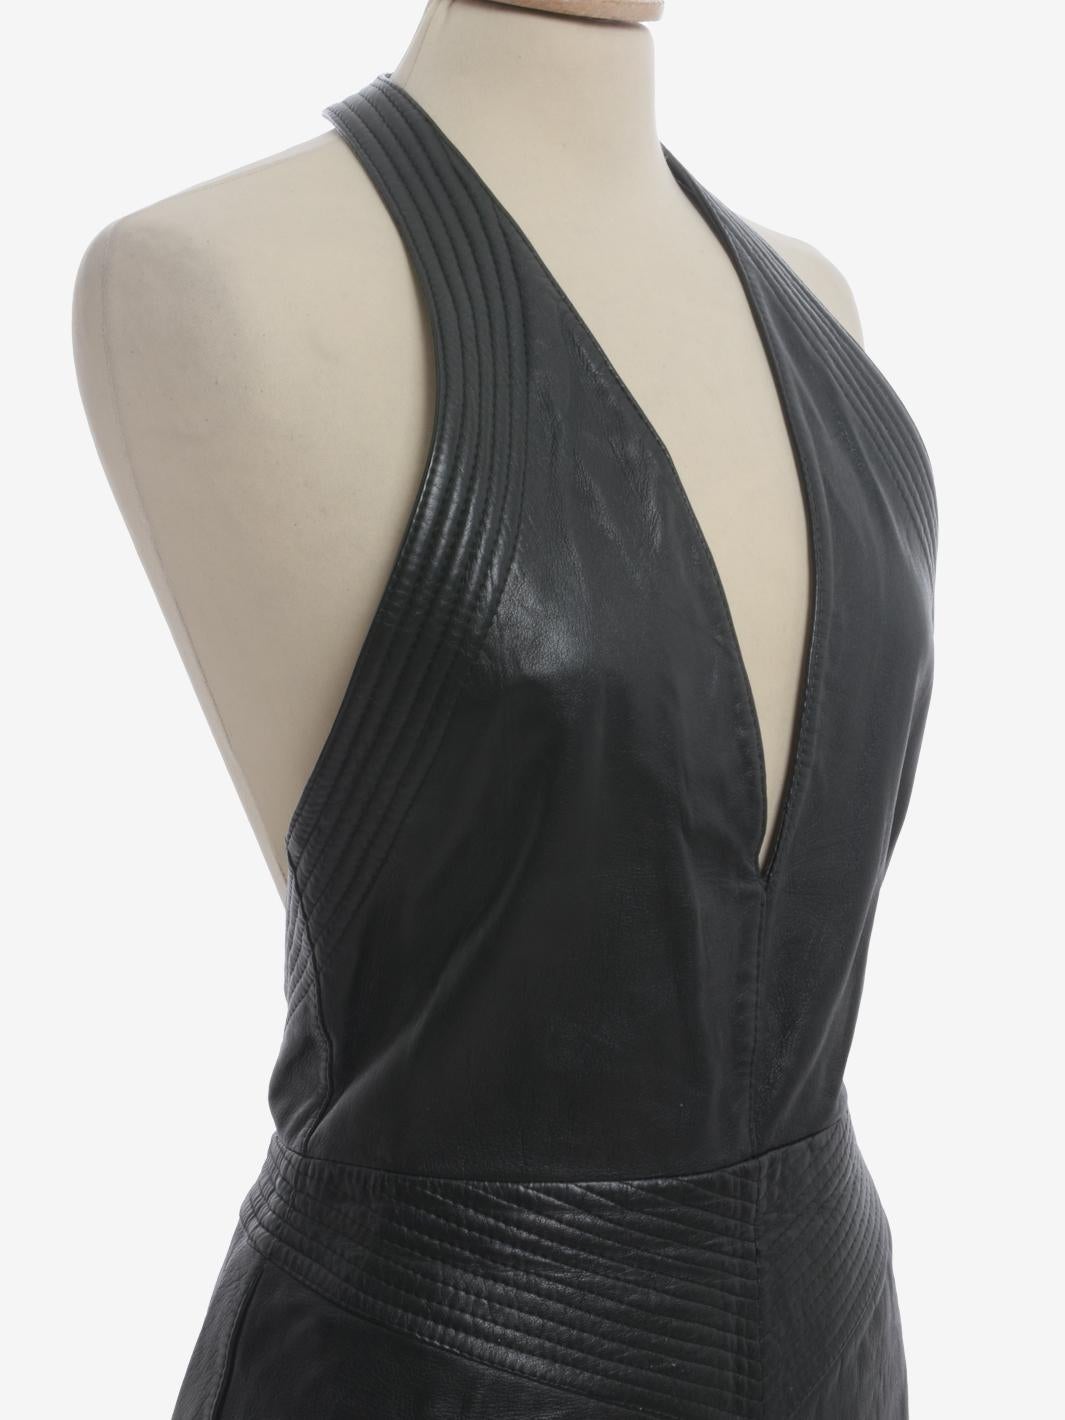 Gianfranco Ferré Leather Midi Dress - 80s For Sale 1